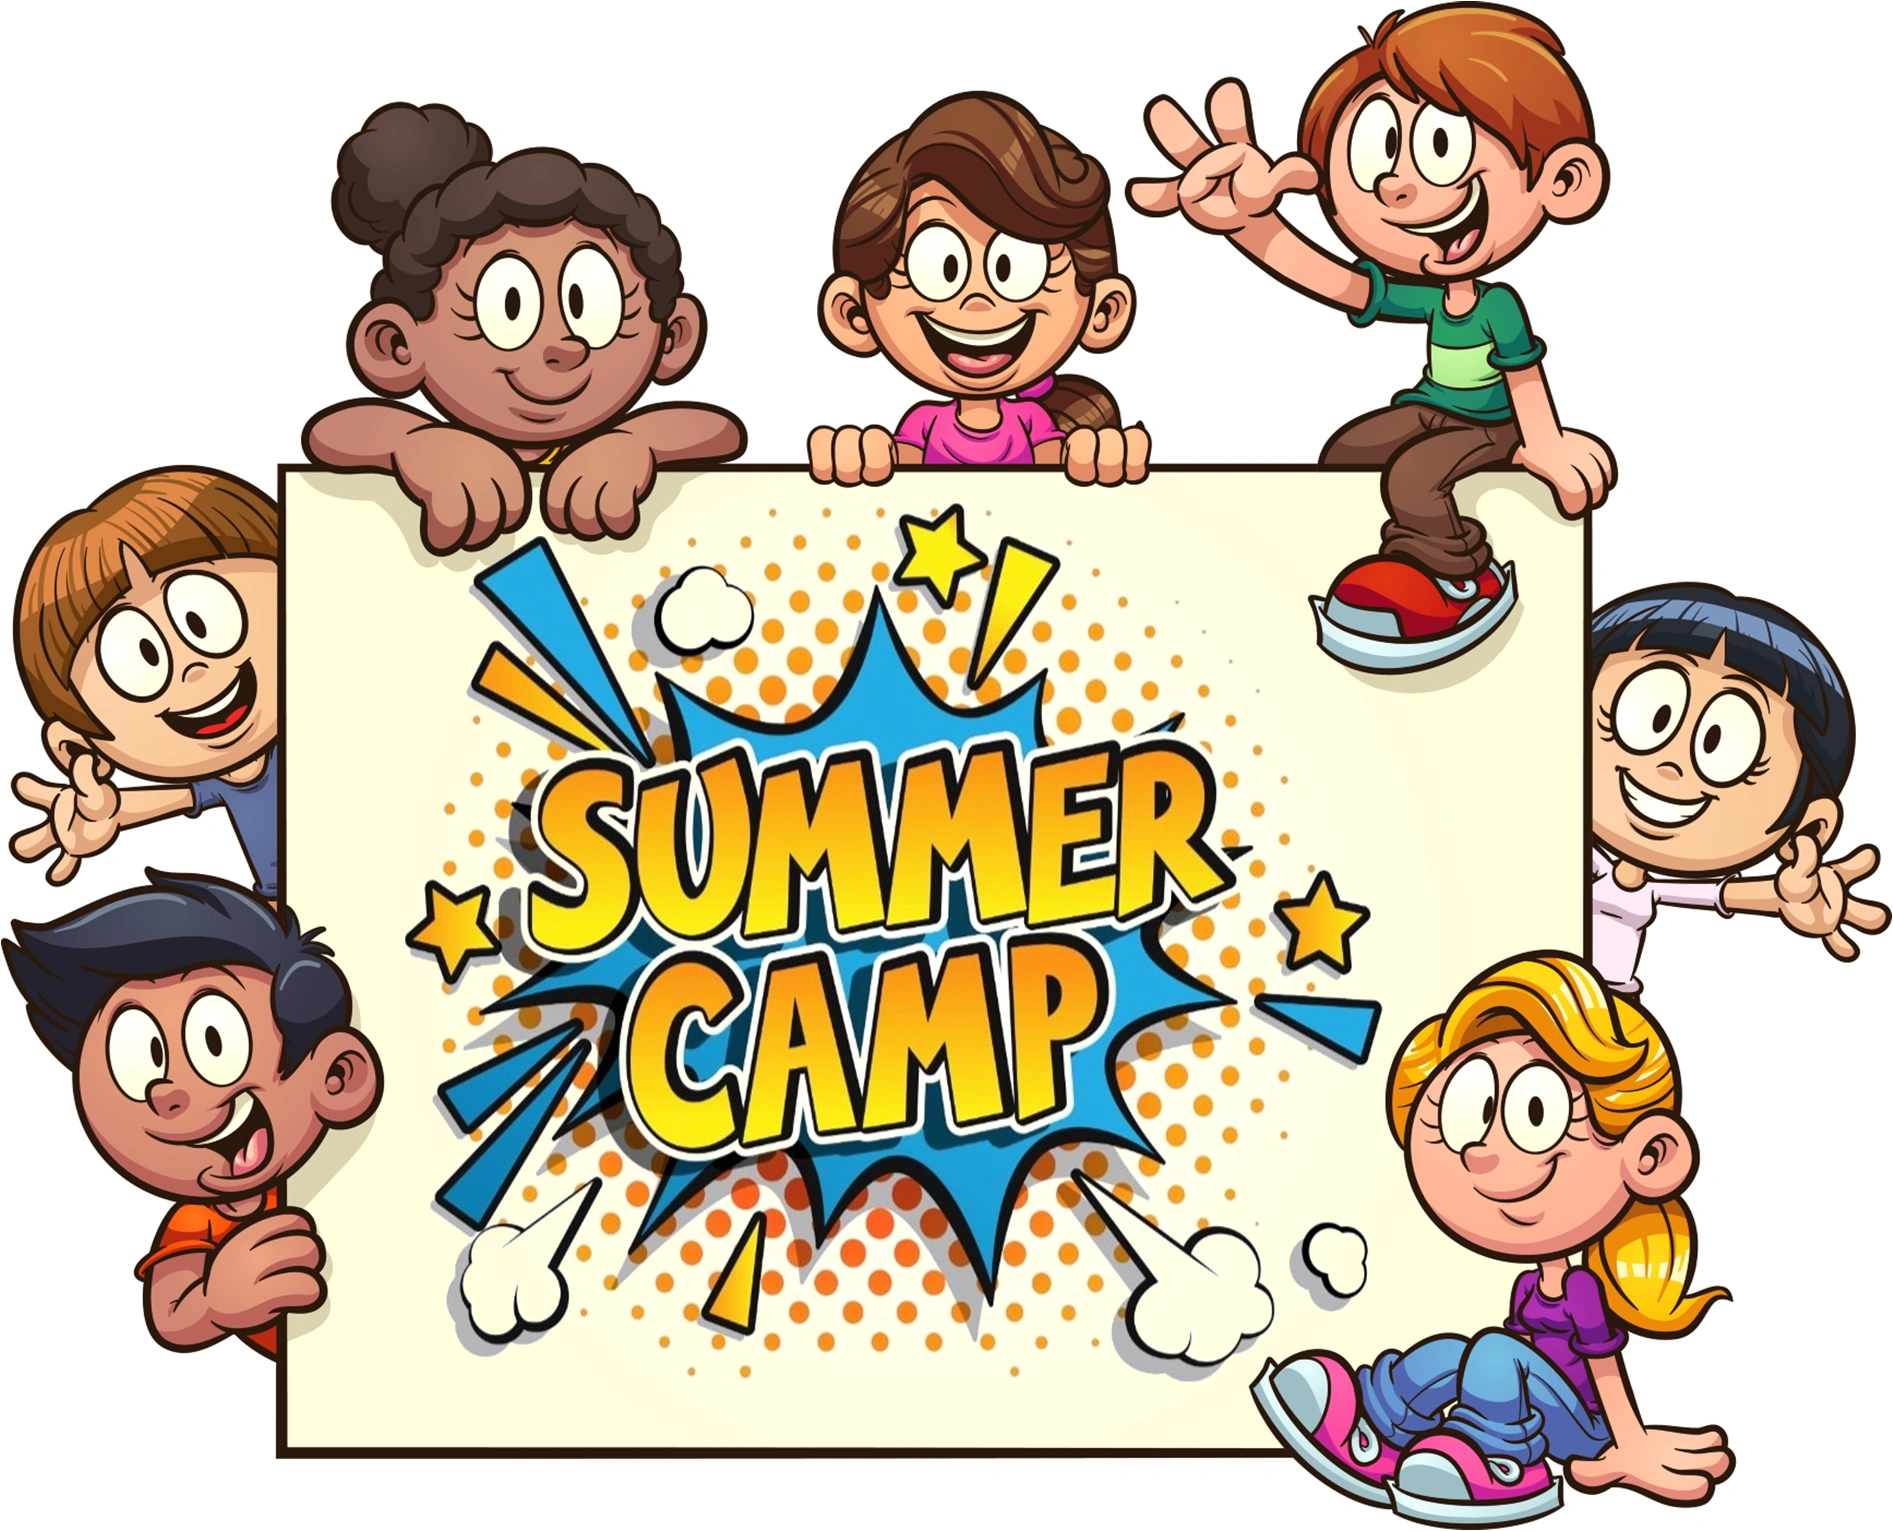 Group of cartoon kids sitting around a Summer Camp sign.